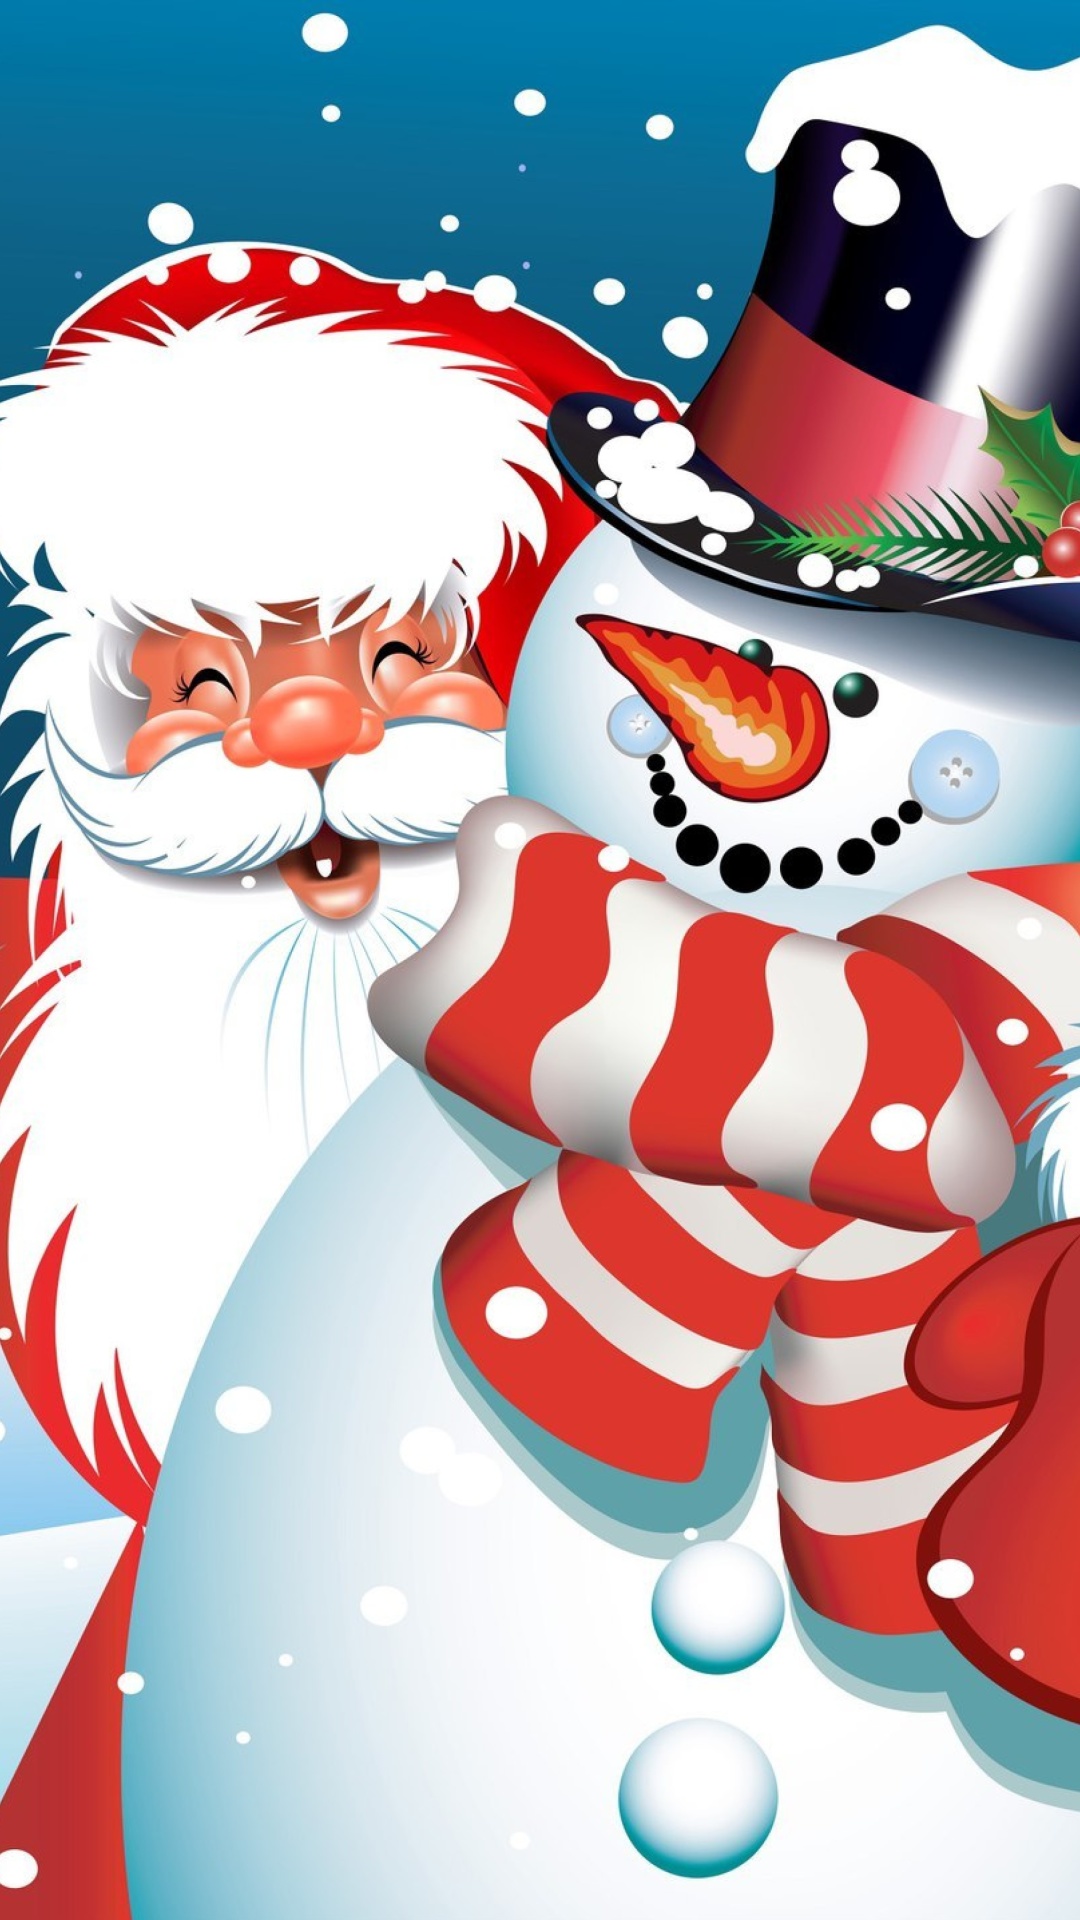 Santa with Snowman wallpaper 1080x1920